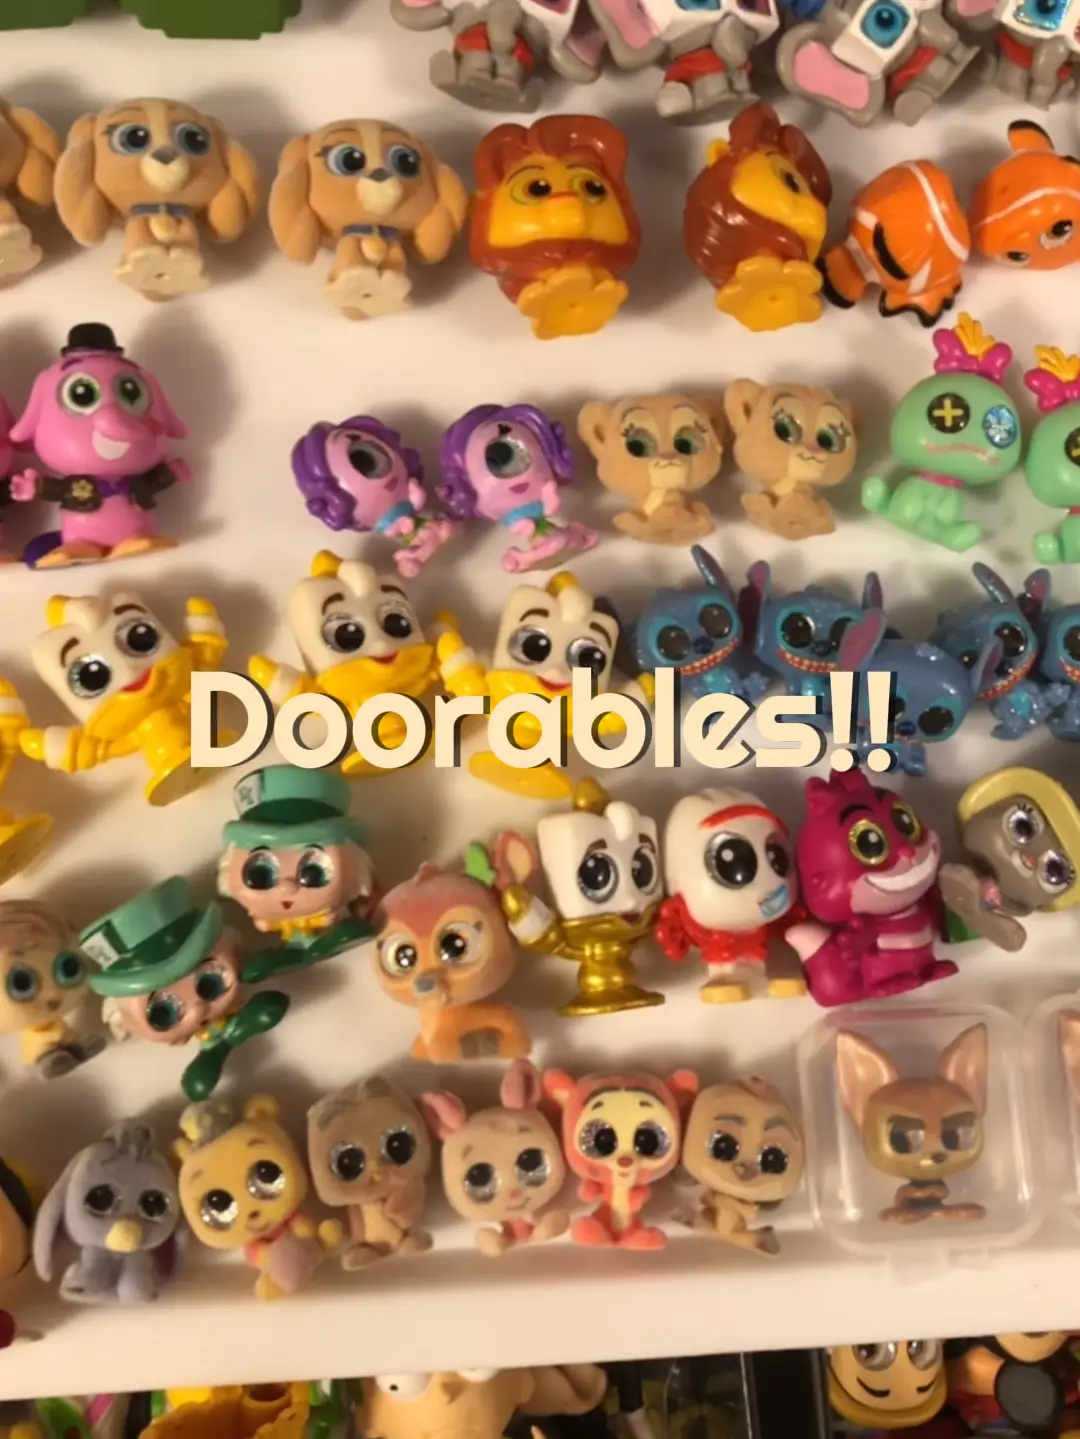 Disney Doorables Storage - Lemon8 Search